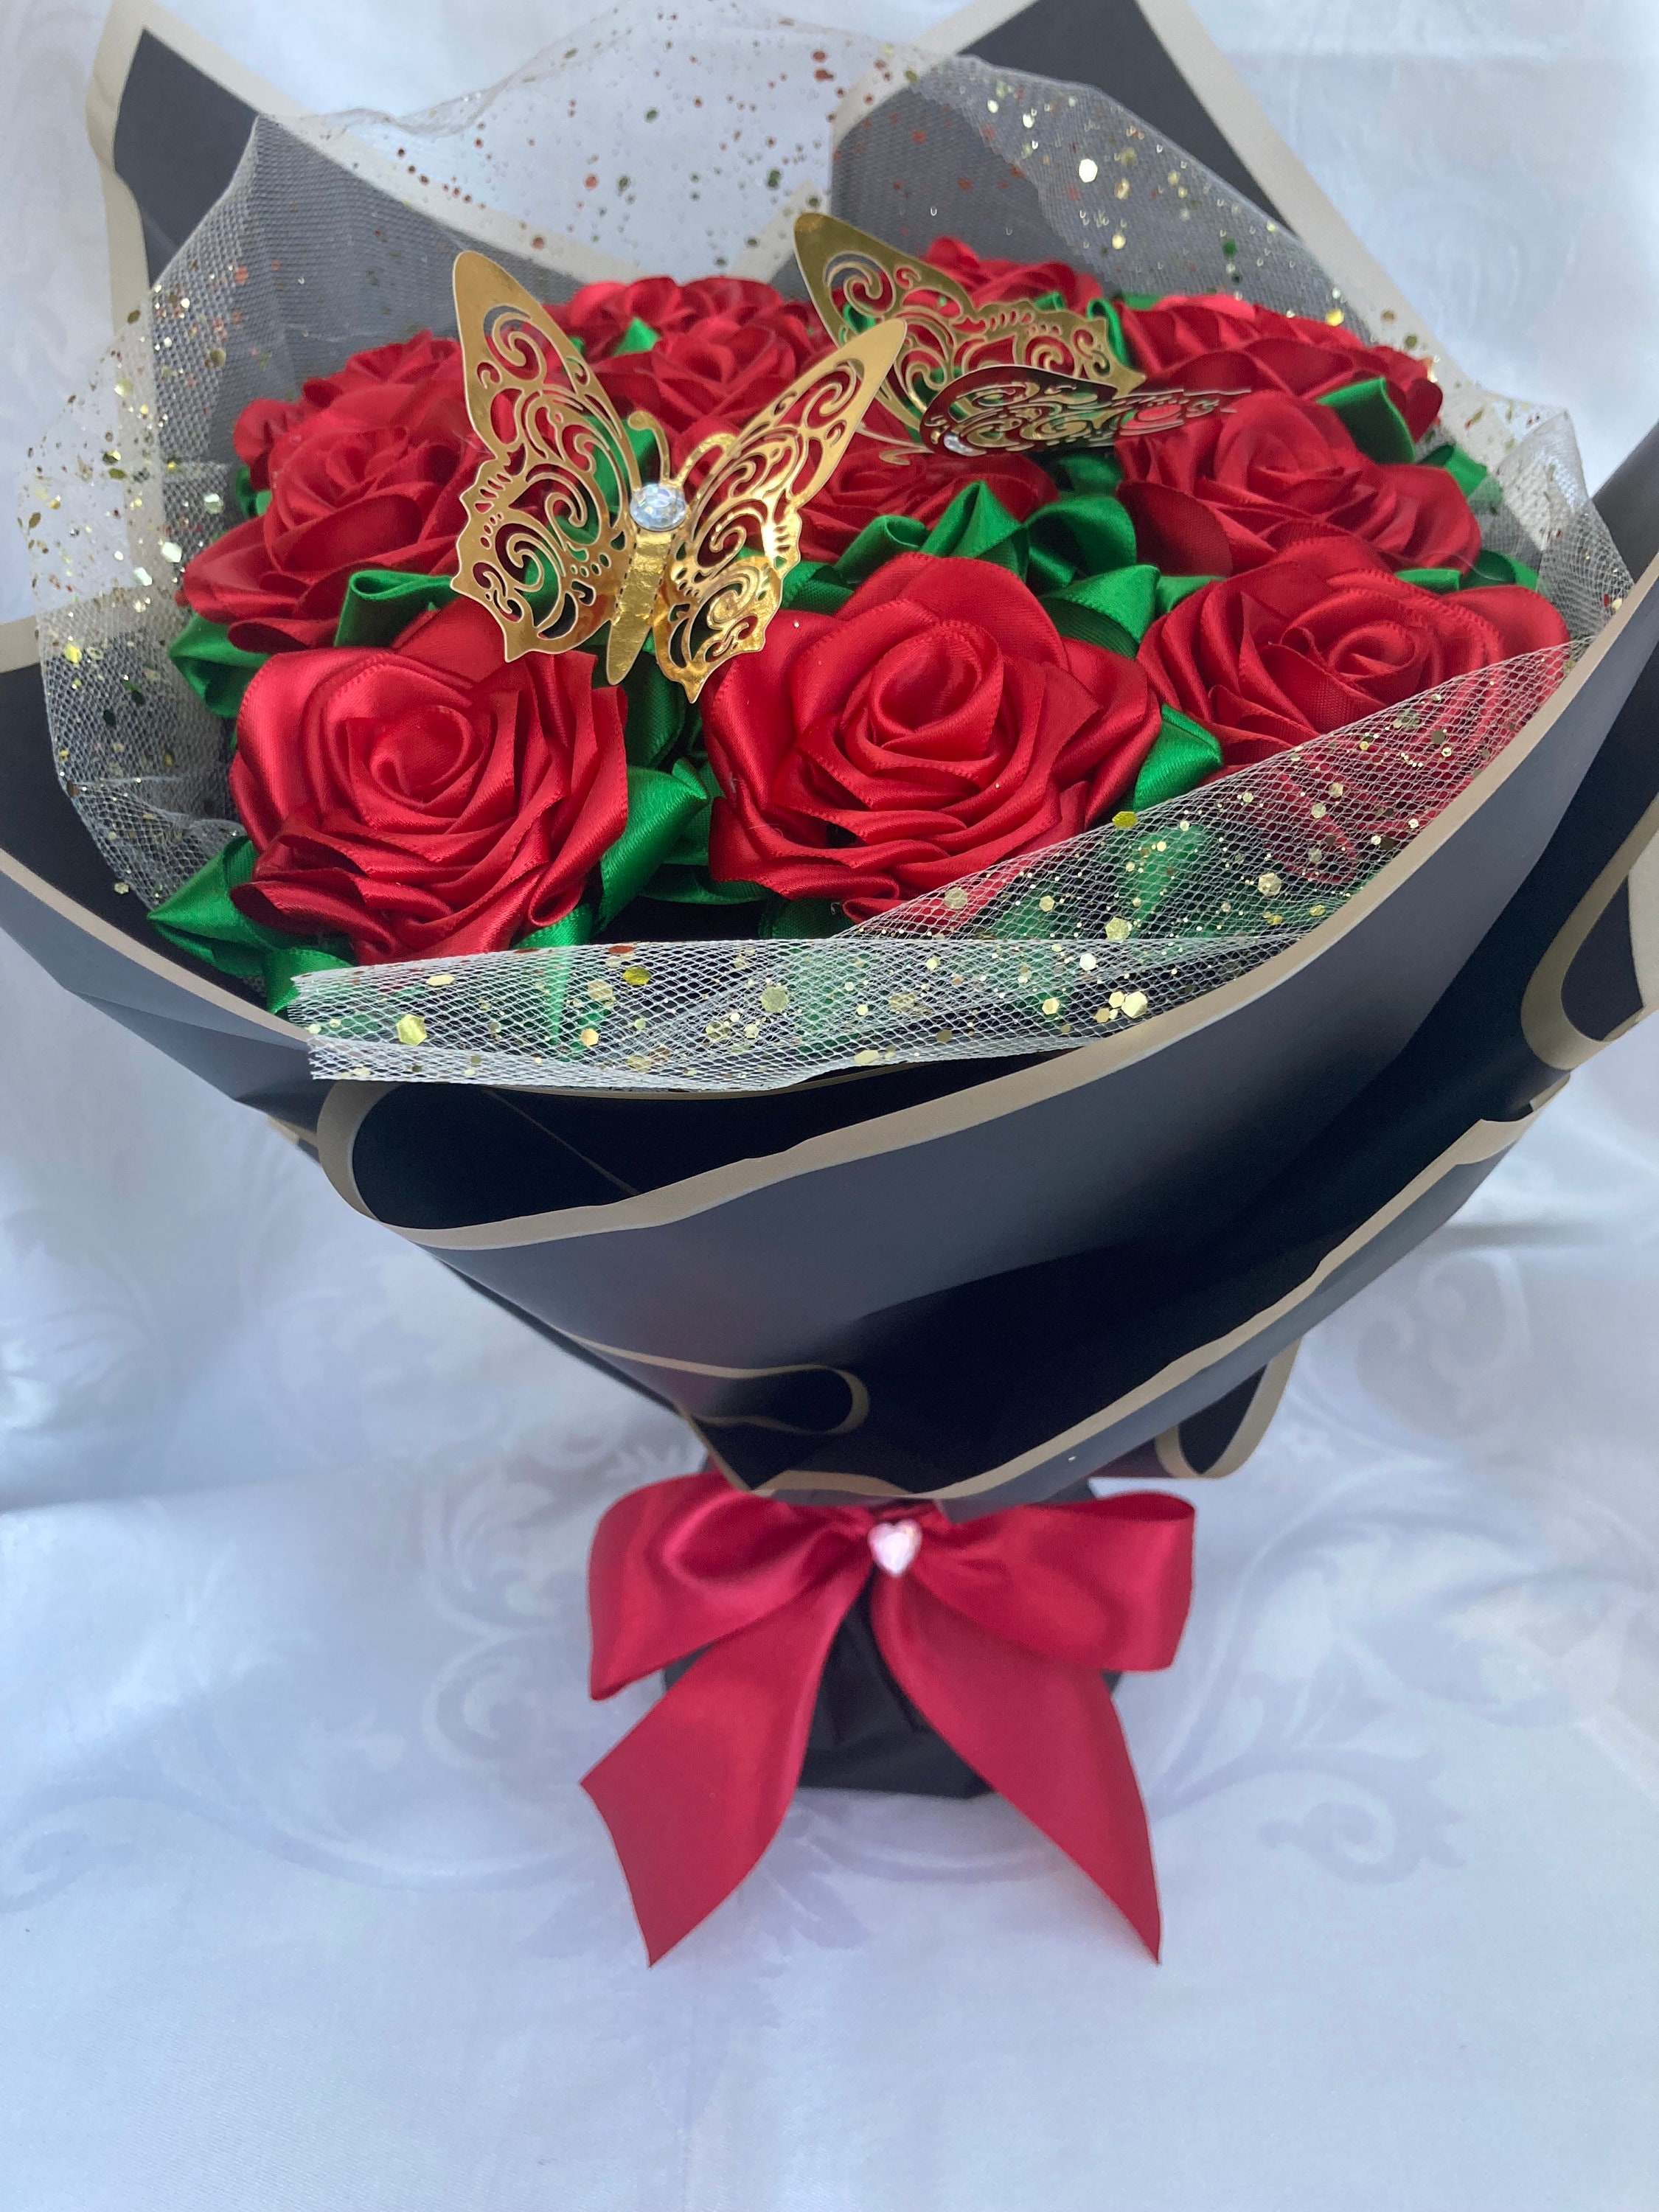 Bling Eternal Rose Bouquet, Ribbon Rose Bouquet, Handmade Fake